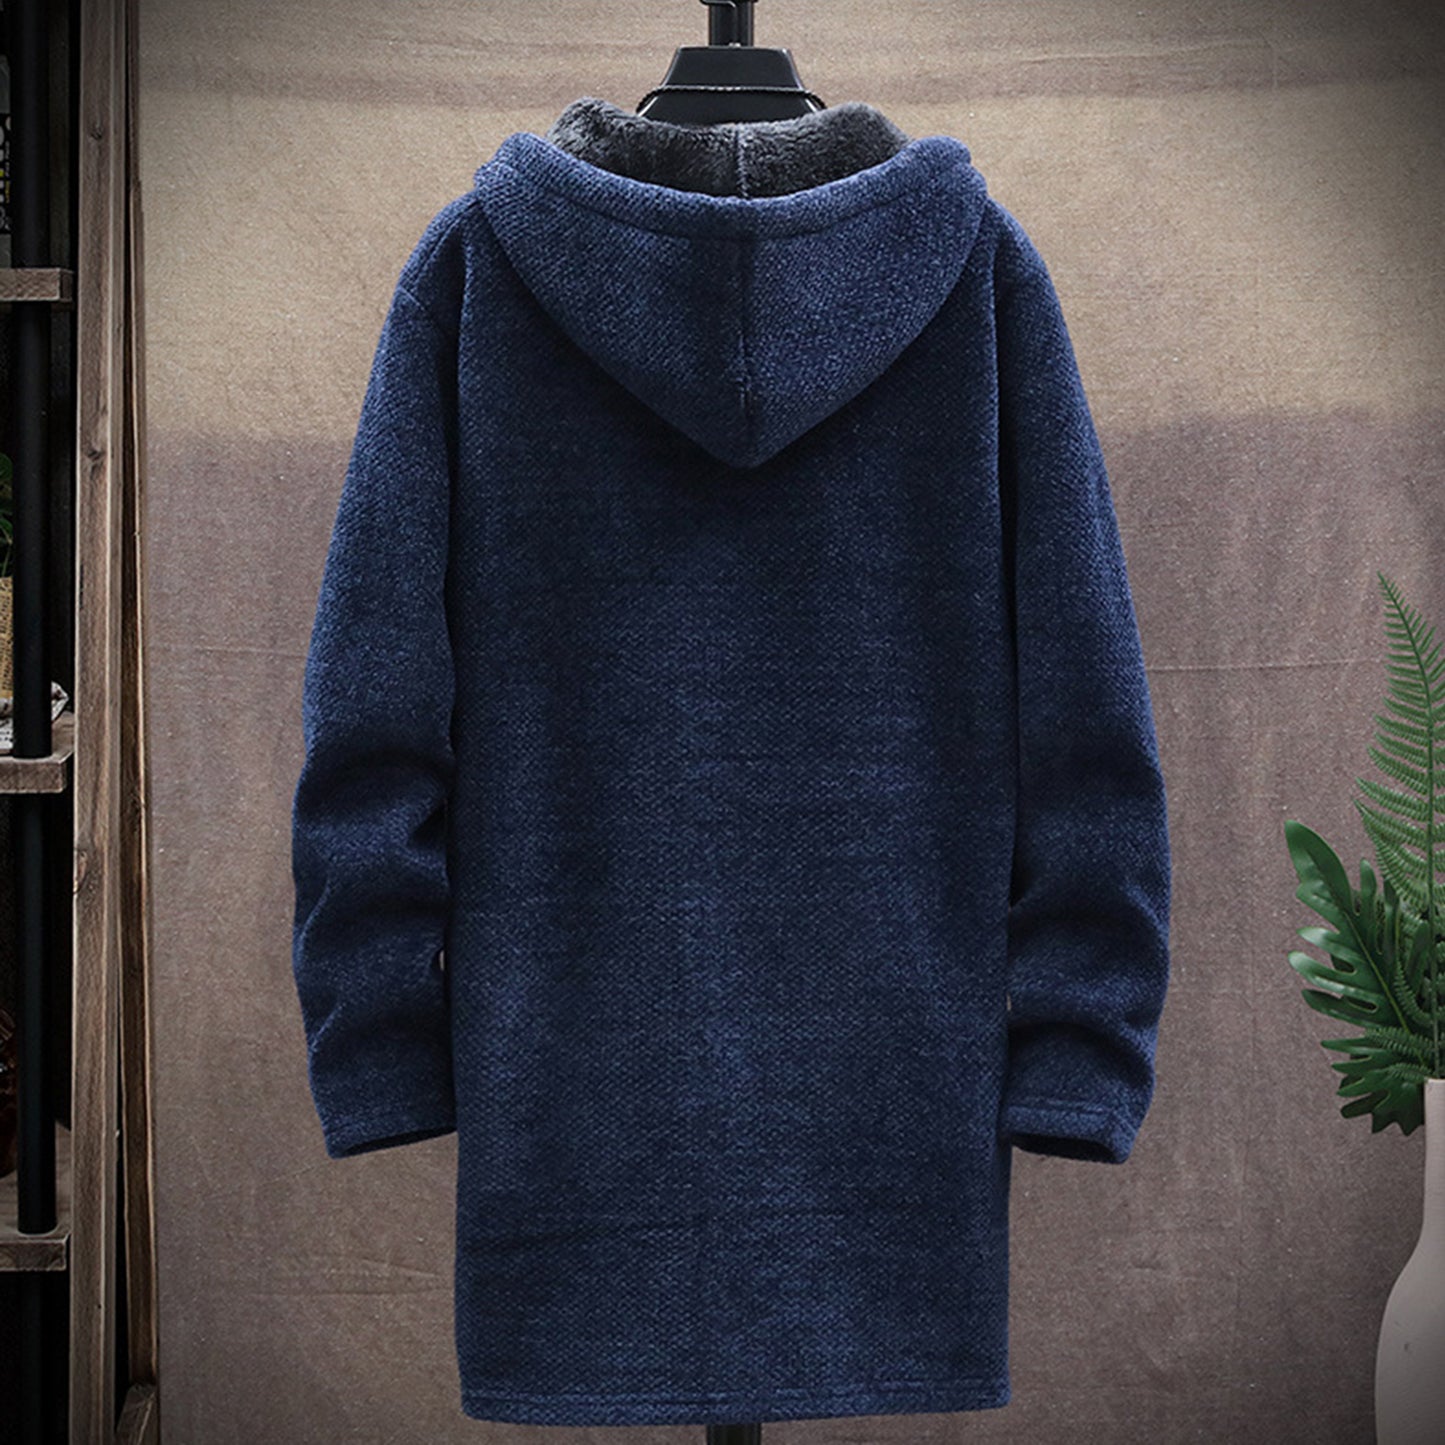 Plush Fur Lined Men's Sweater Jacket